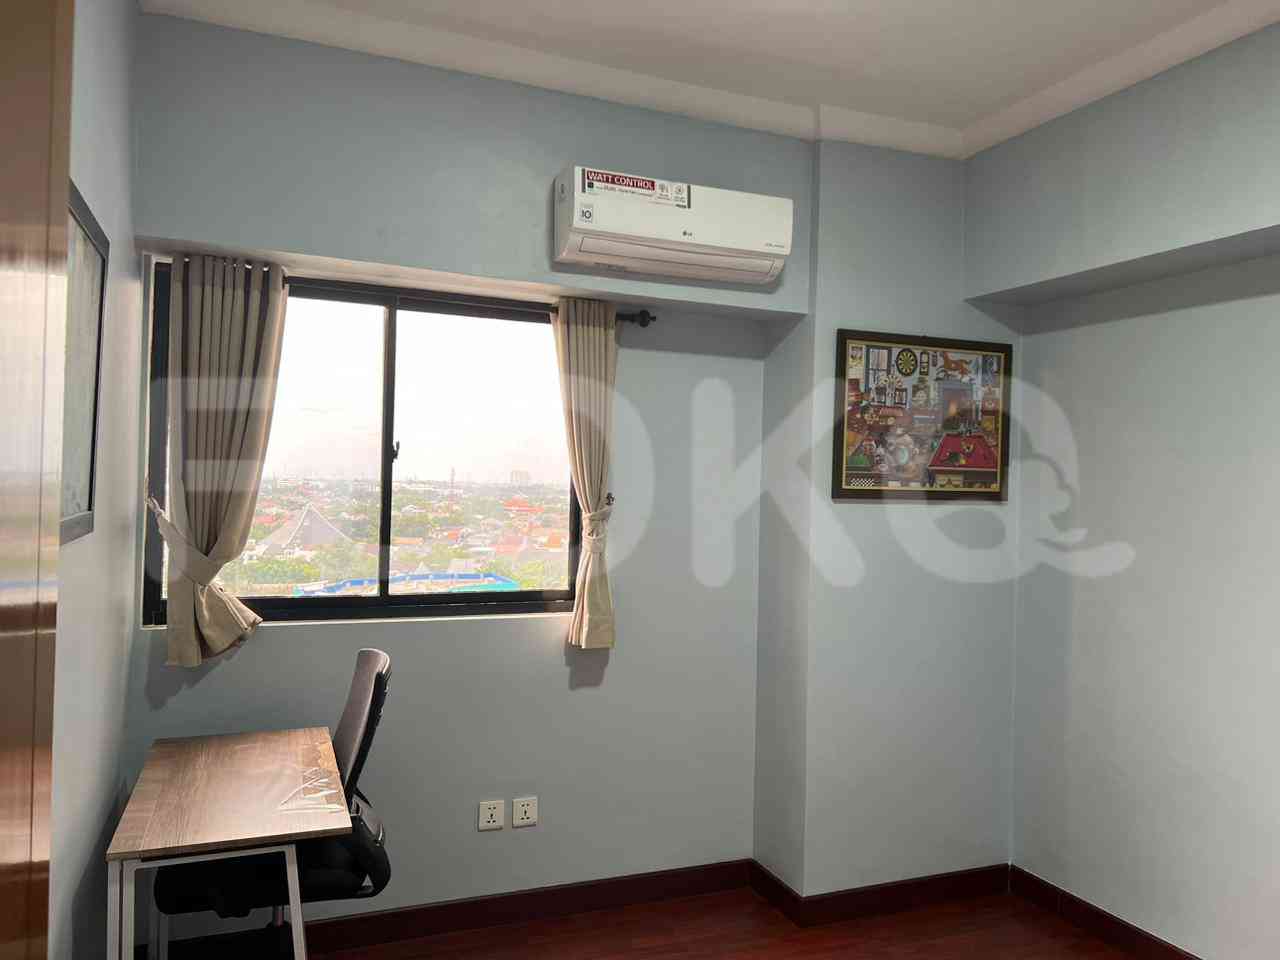 3 Bedroom on 10th Floor for Rent in BonaVista Apartment - fled92 3